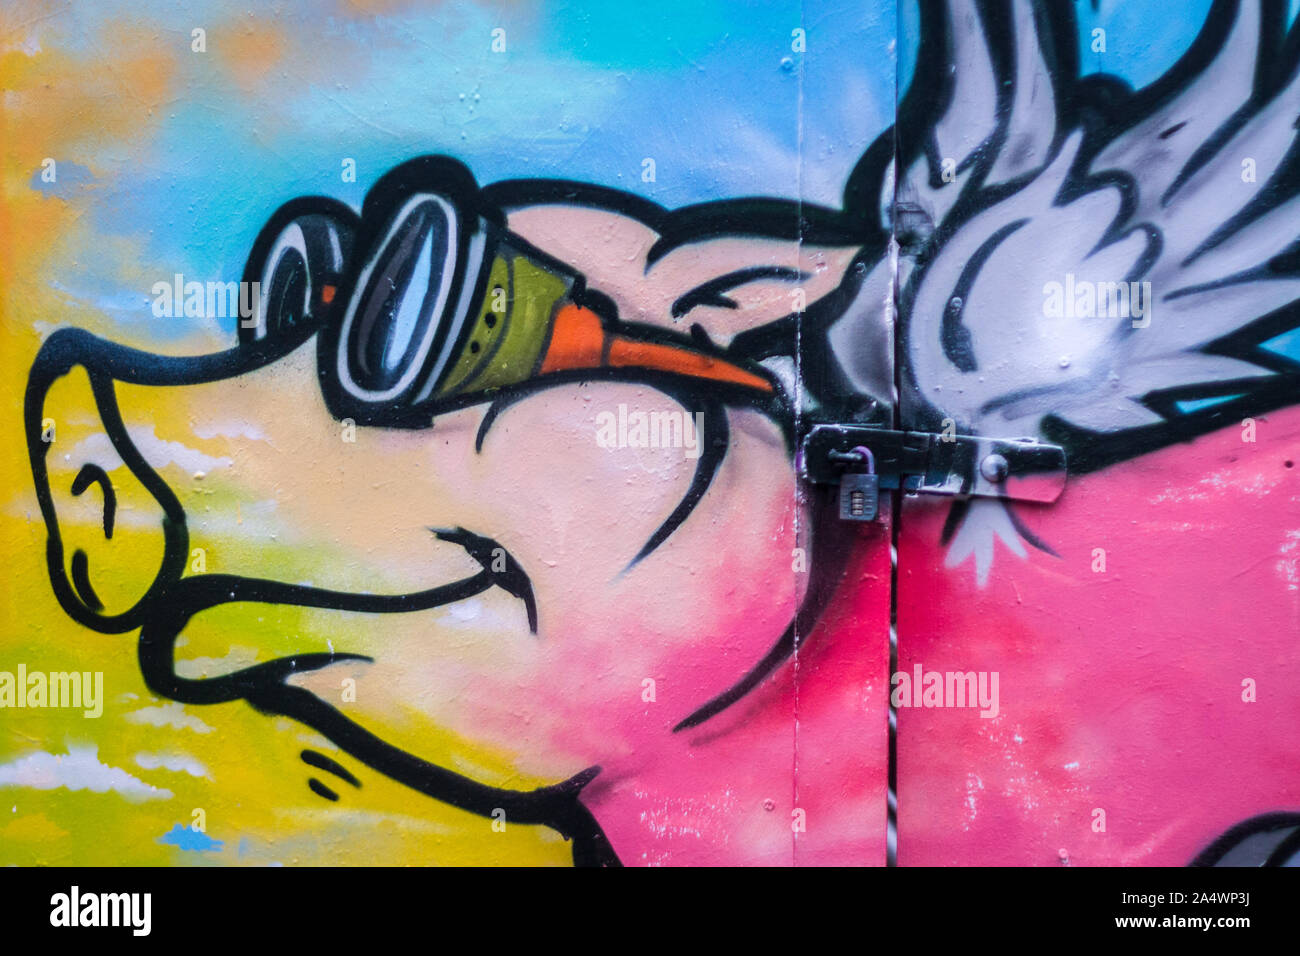 Dettagli del Flying Pig murale di Zandism in Camden, Londra Foto Stock